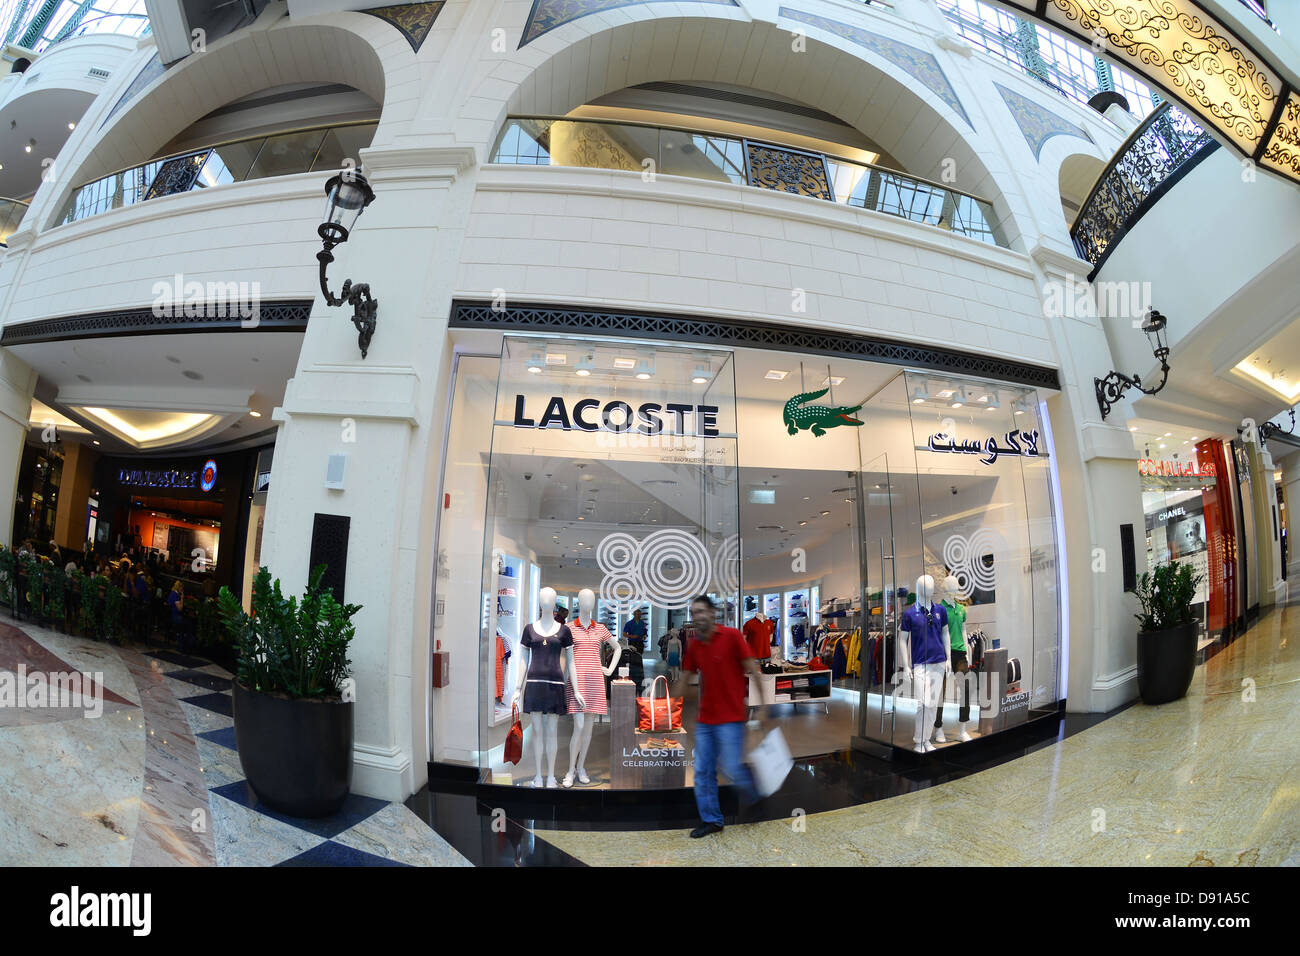 lacoste shops in dubai